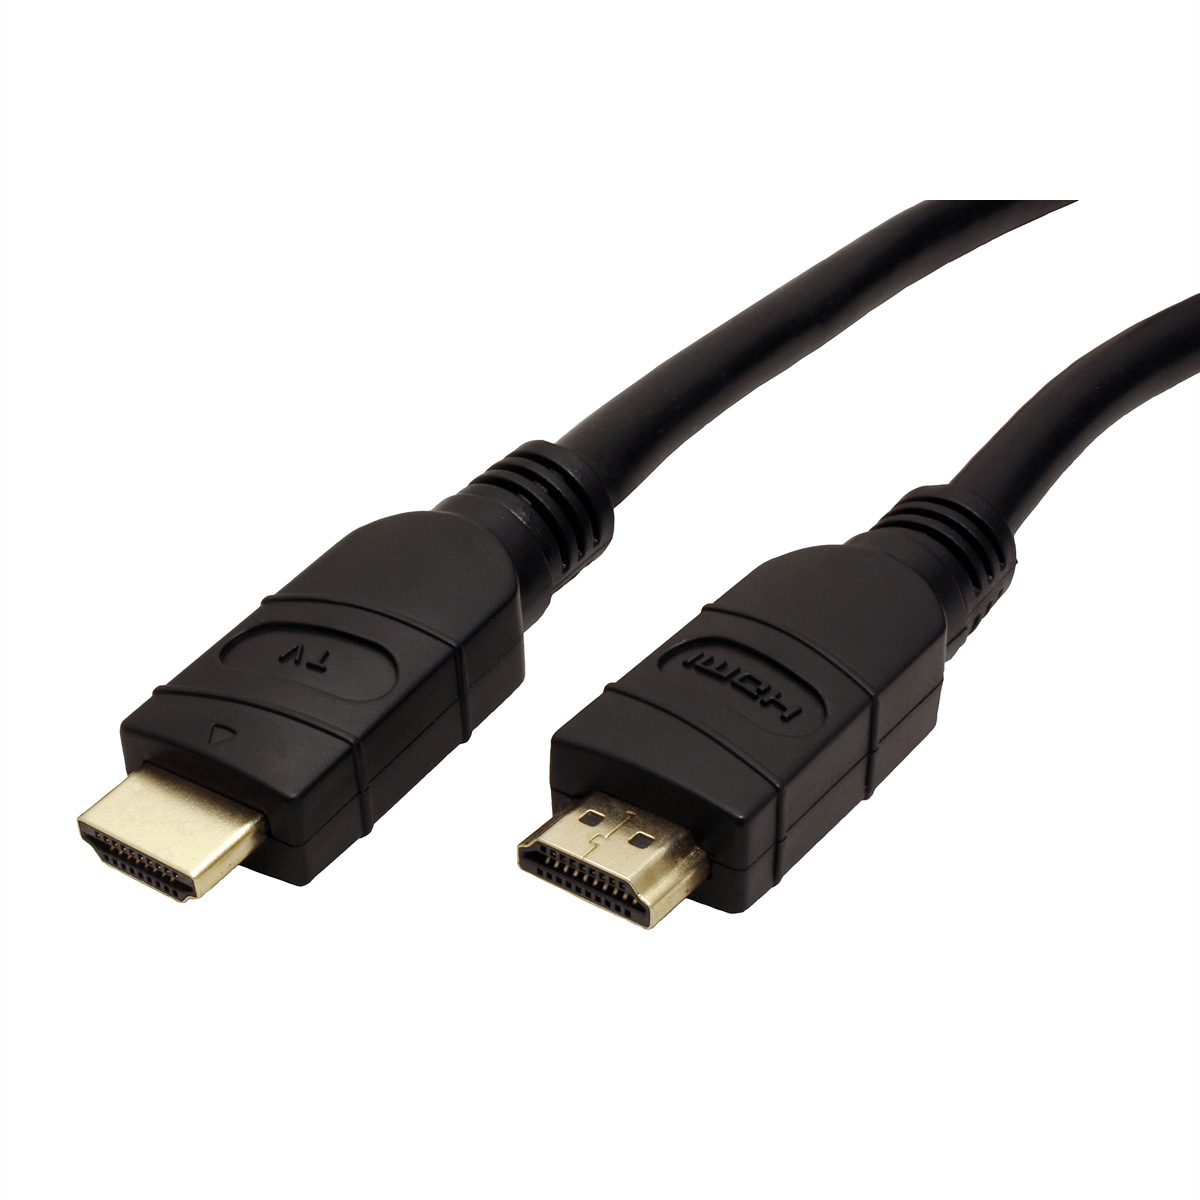 VALUE UHD HDMI 4K2K Kabel mit Repeater 25.0 m